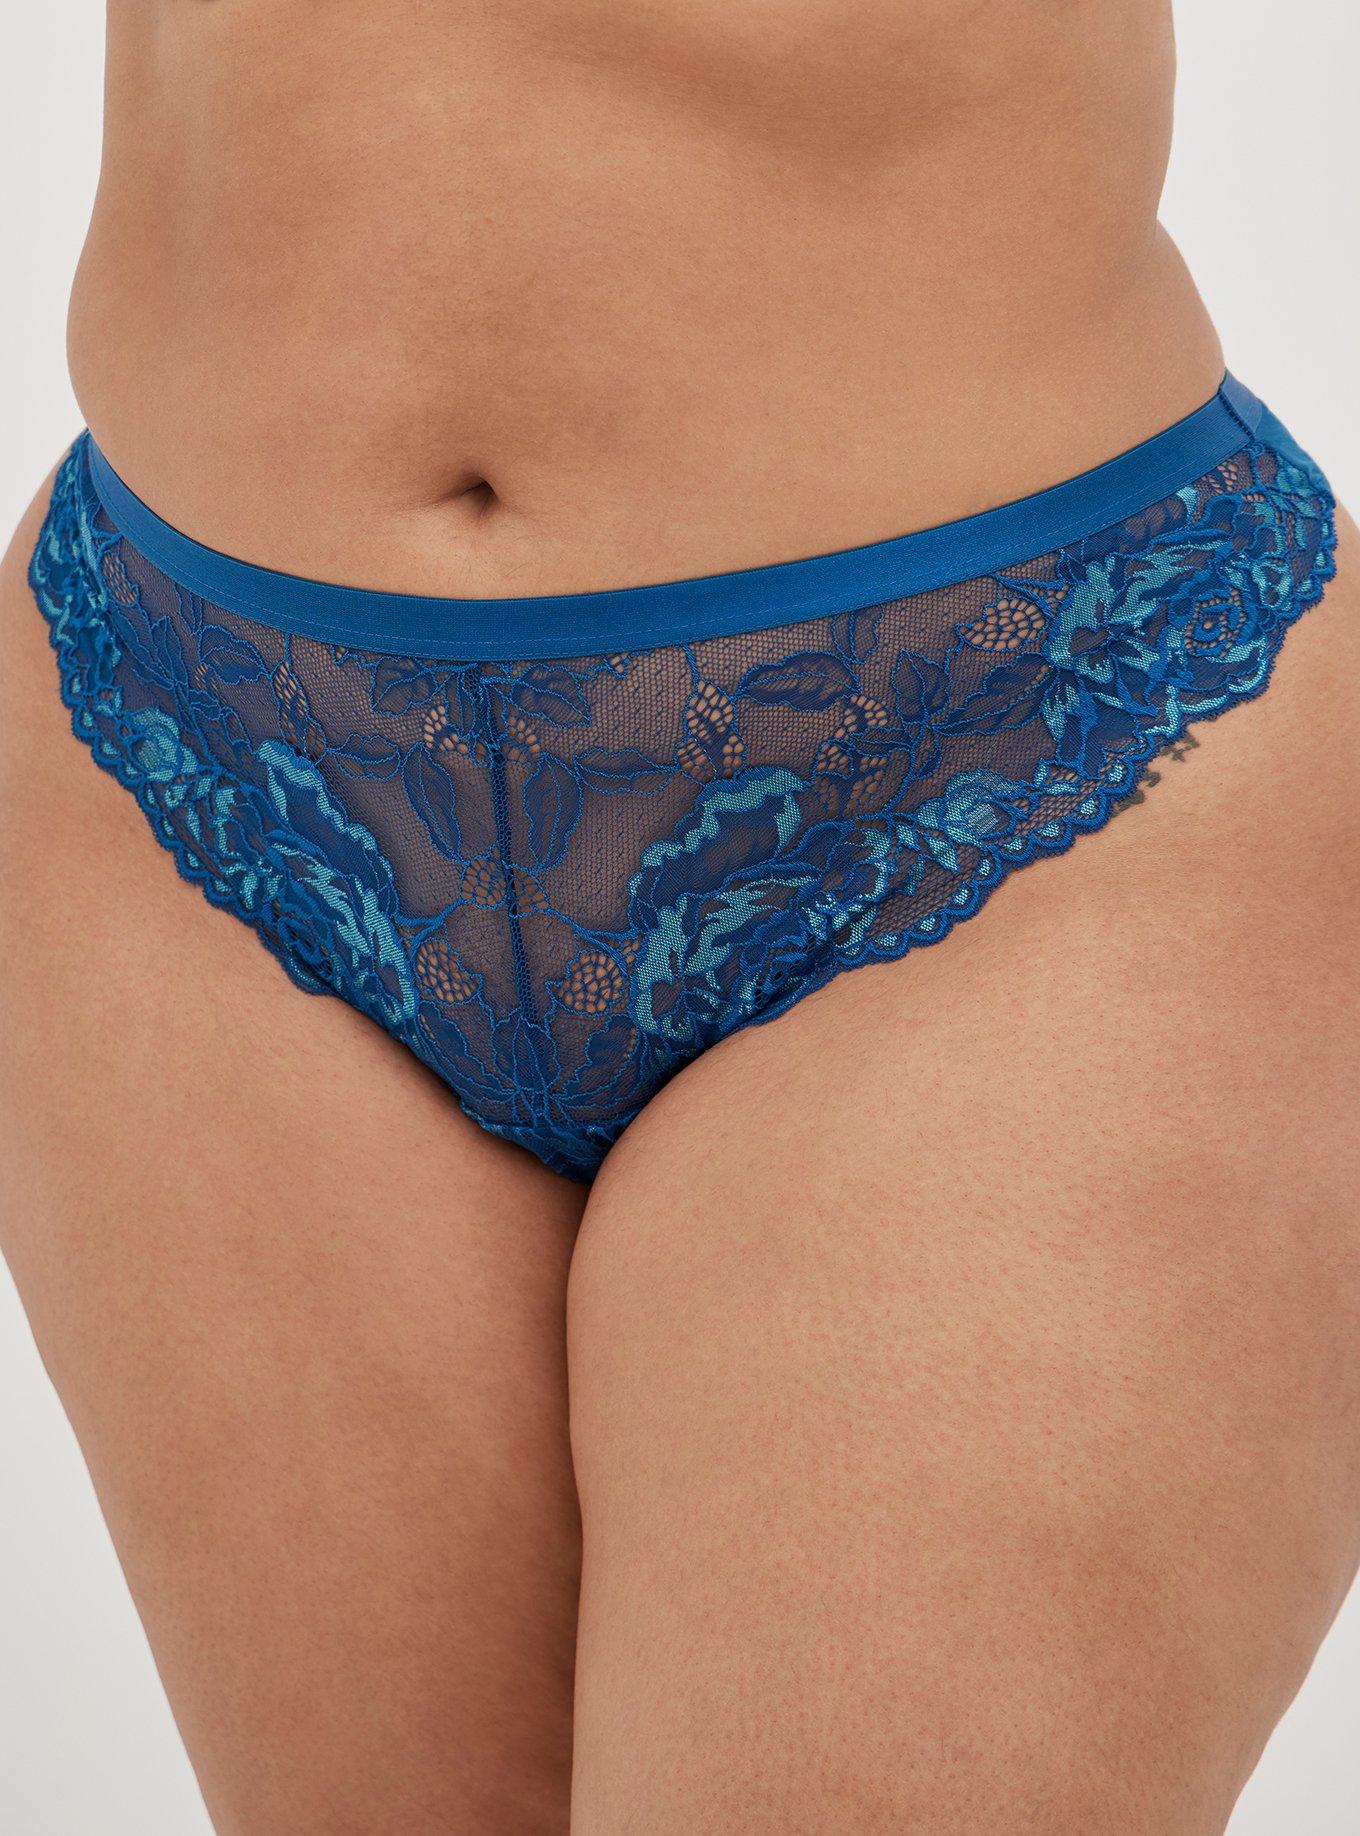 Plus Size - Thong Panty - Lace Sea Blue - Torrid